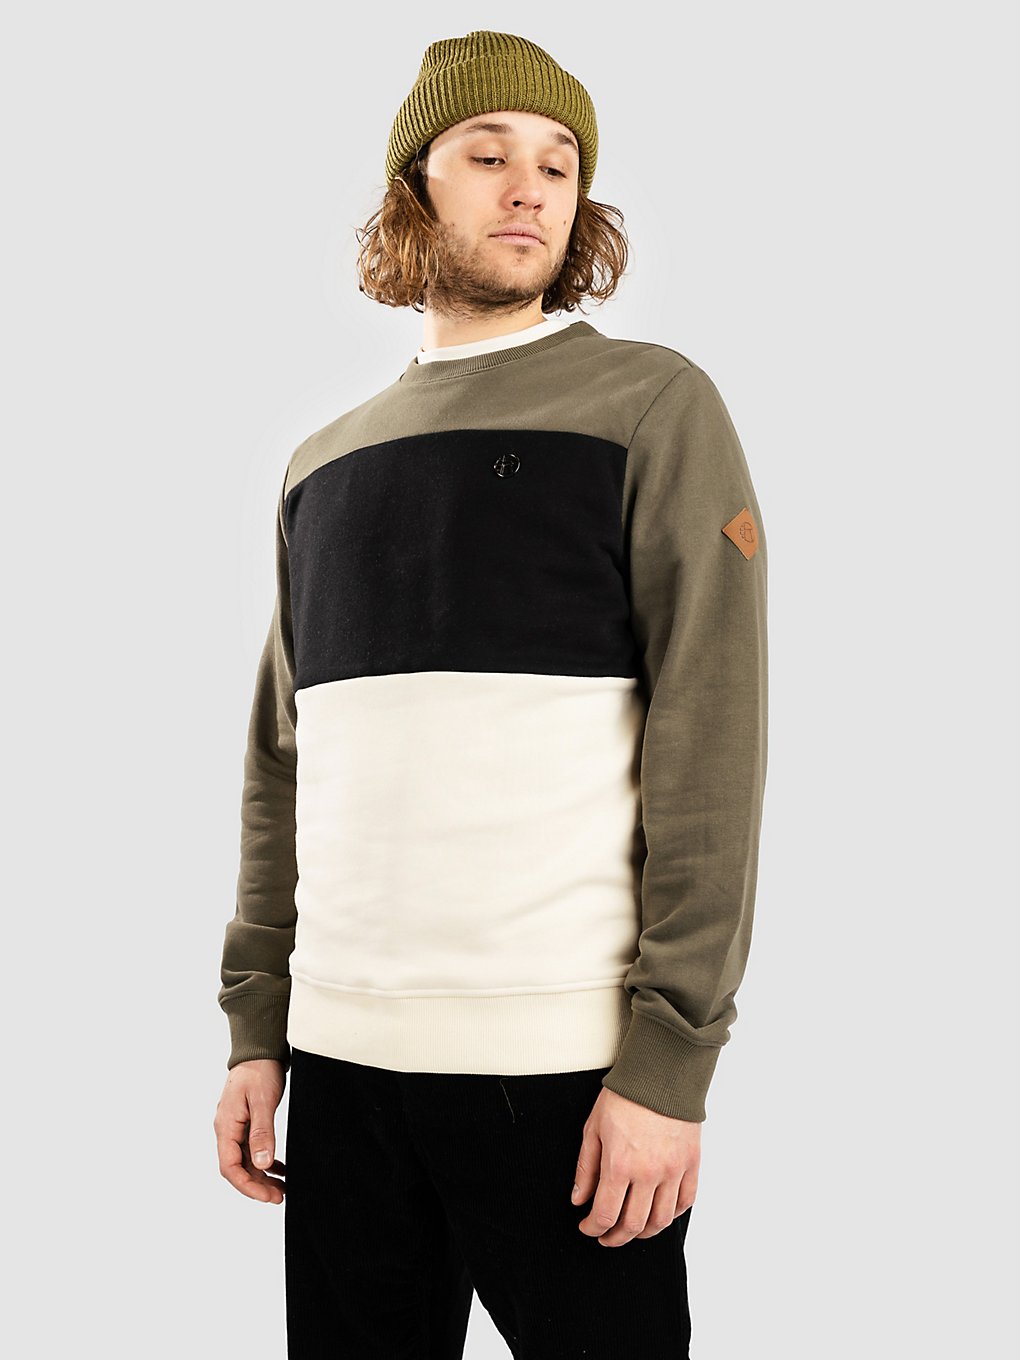 Kazane Anders Sweater whtaspara kaufen